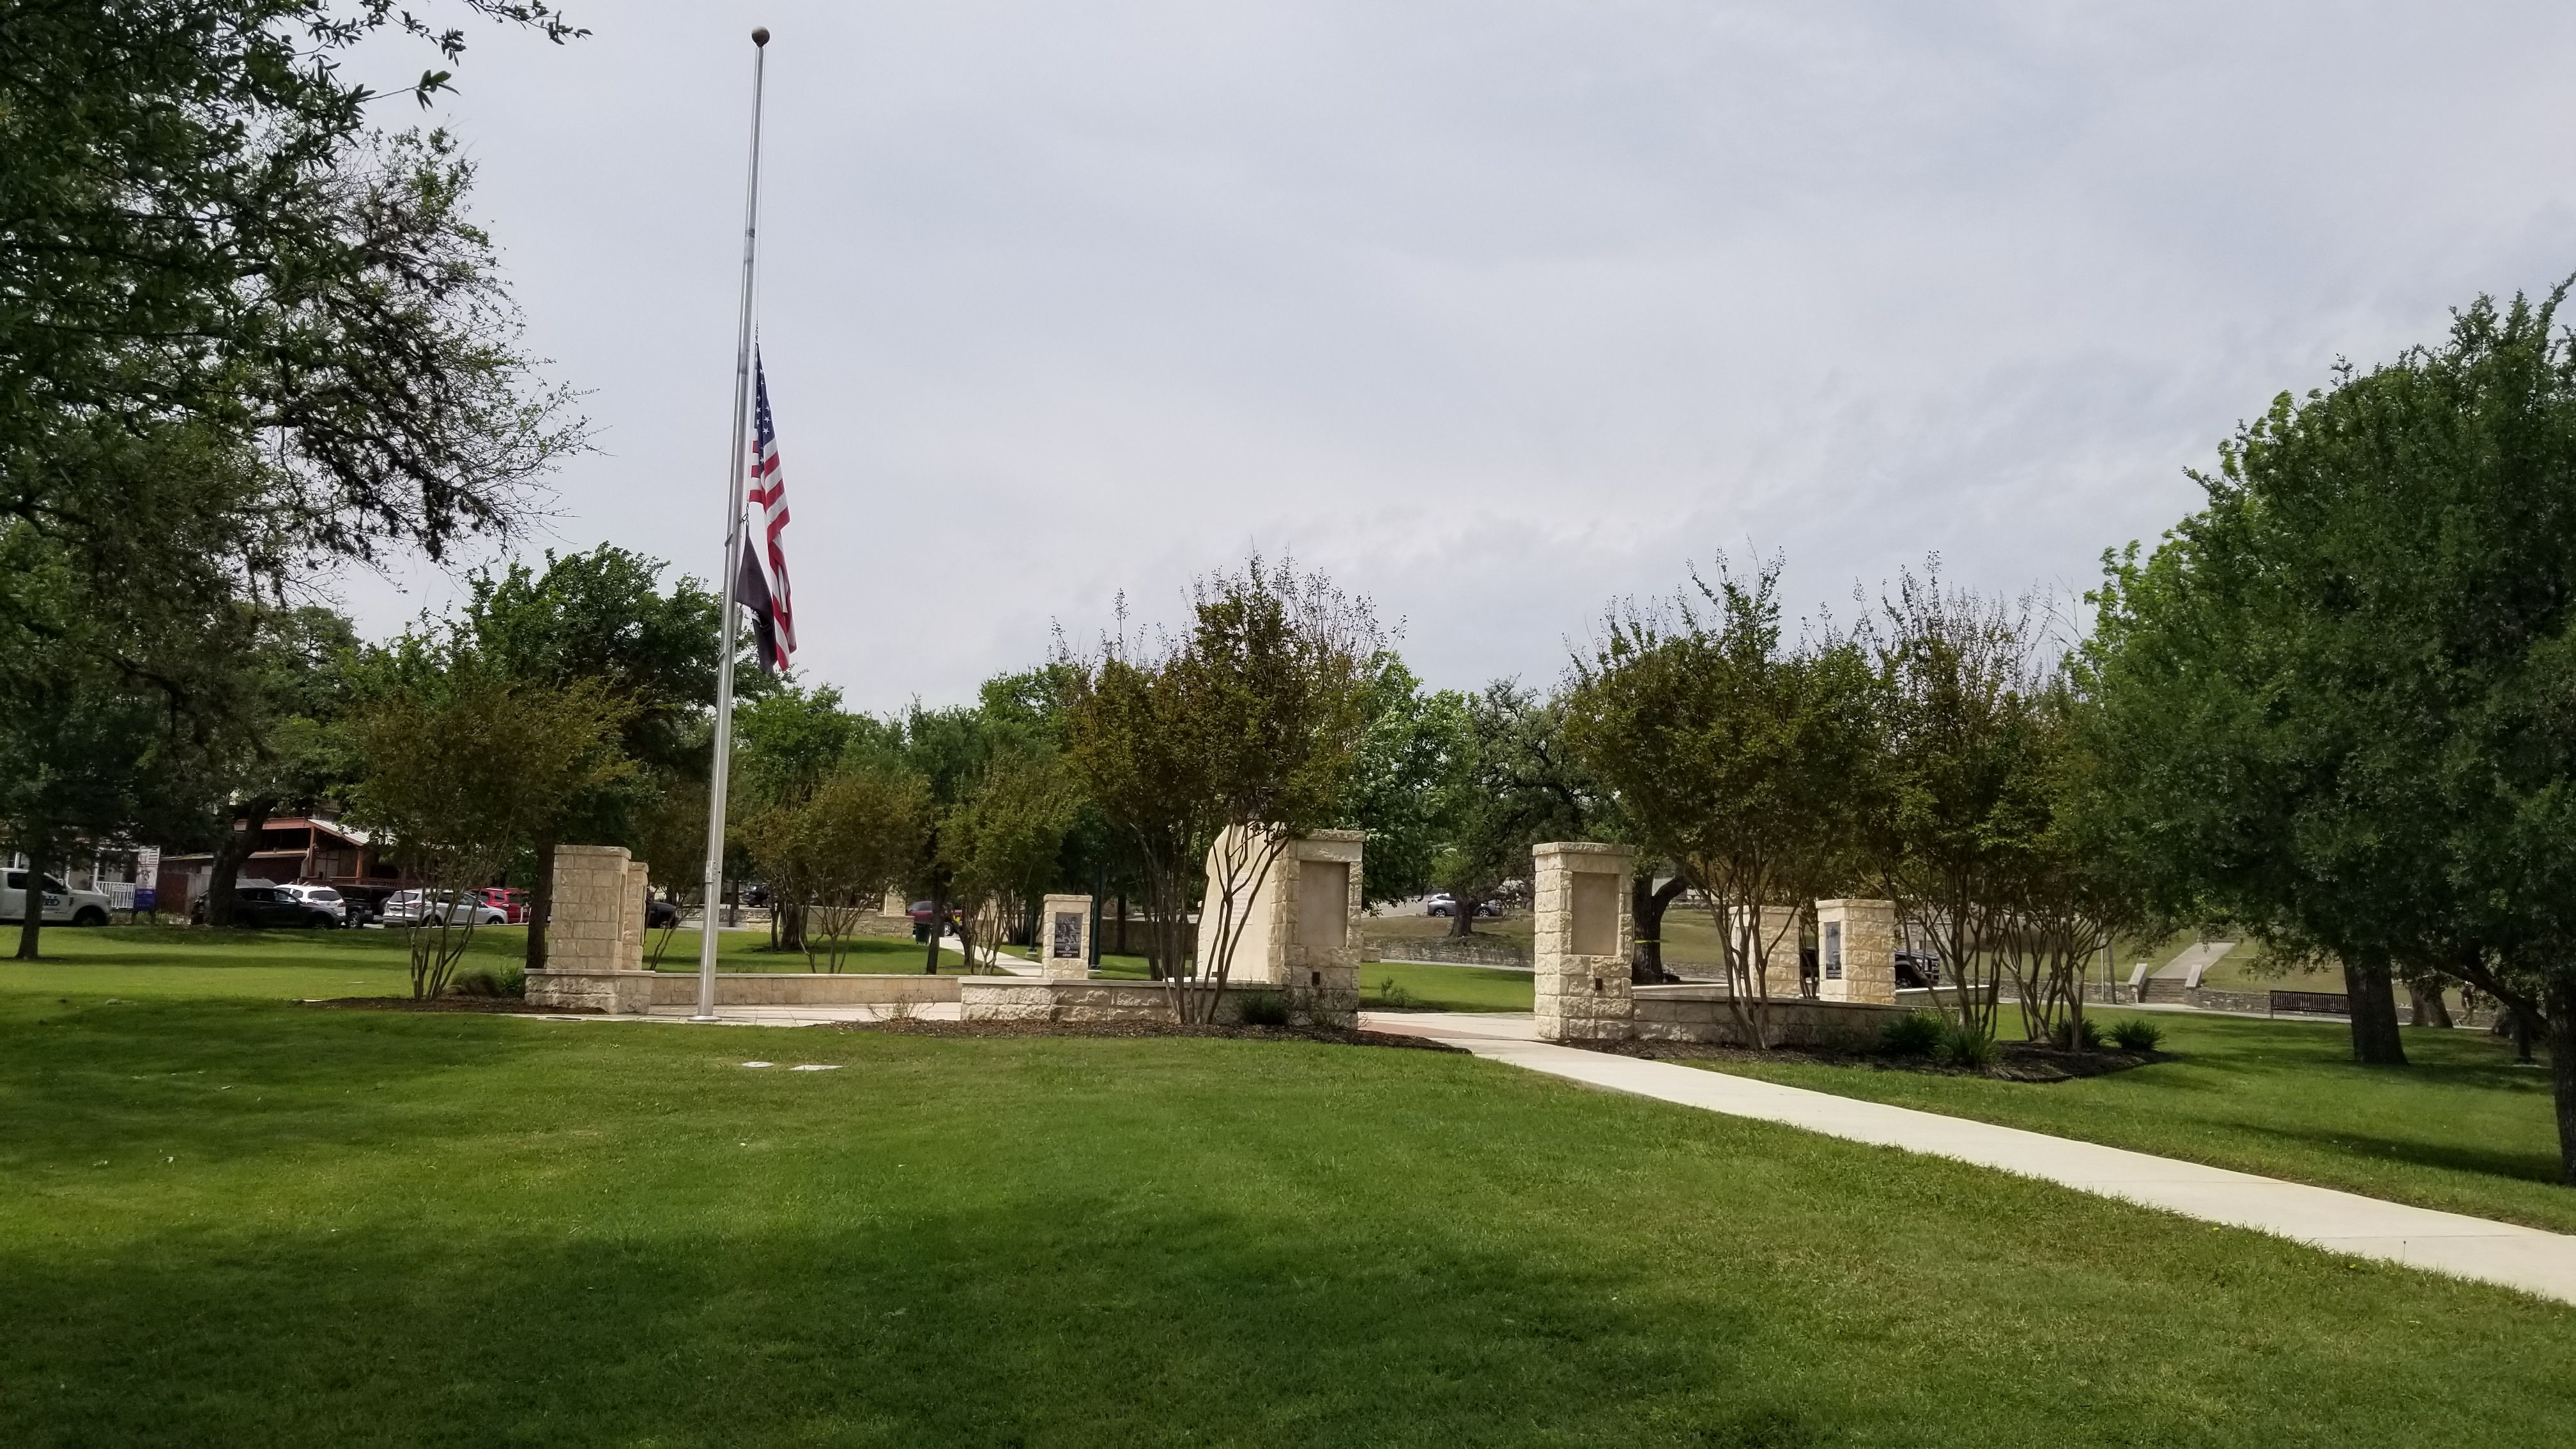 The Veterans Plaza